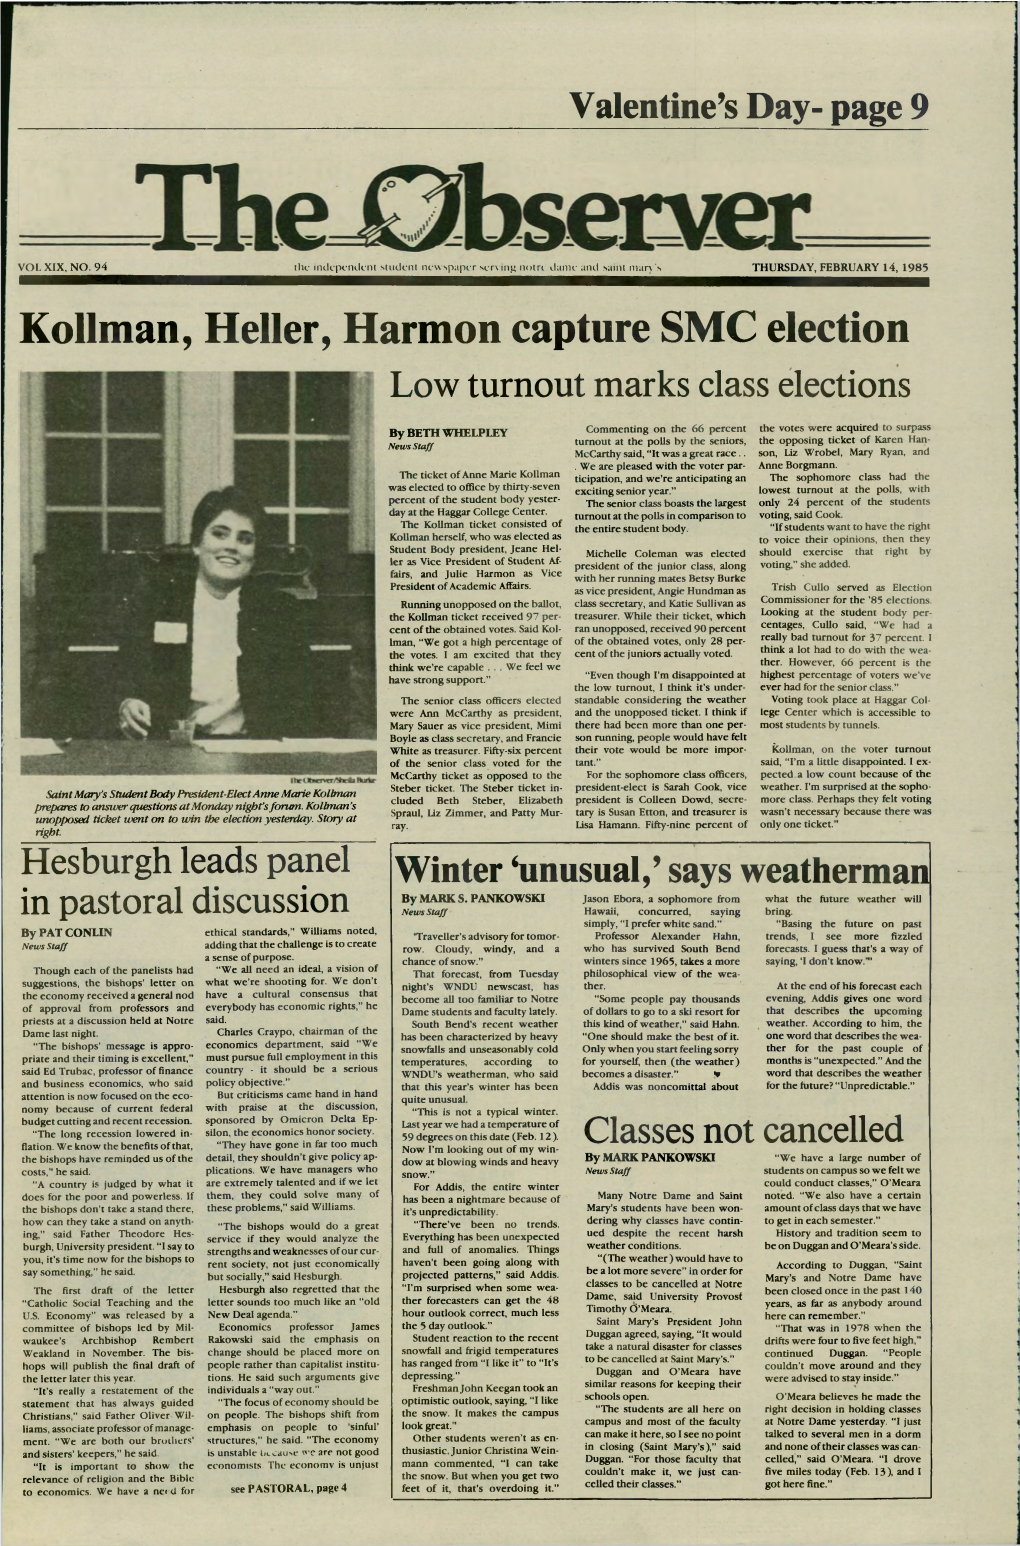 Kollman, Heller, Harmon Capture SMC Election Low Turnout Marks Class Elections